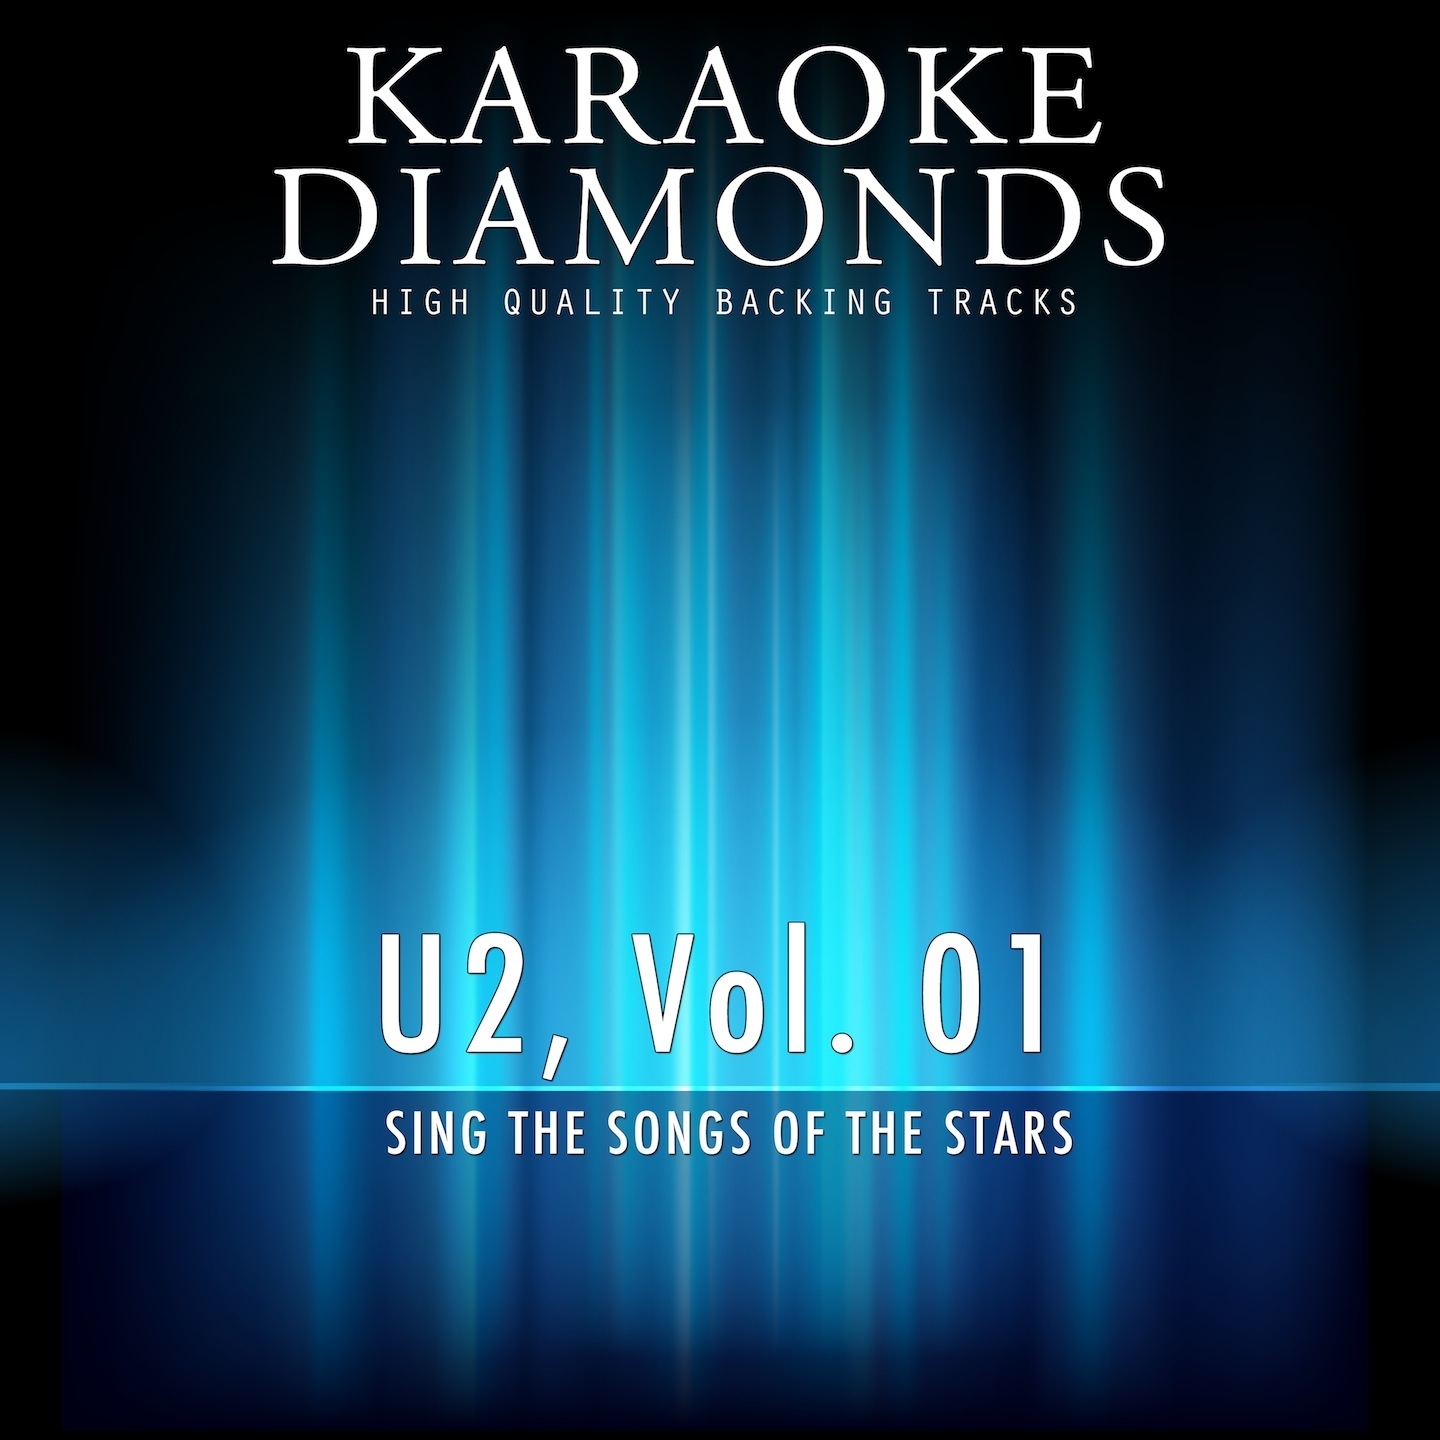 Pride (In the Name of Love) (Karaoke Version In the Style of U2)